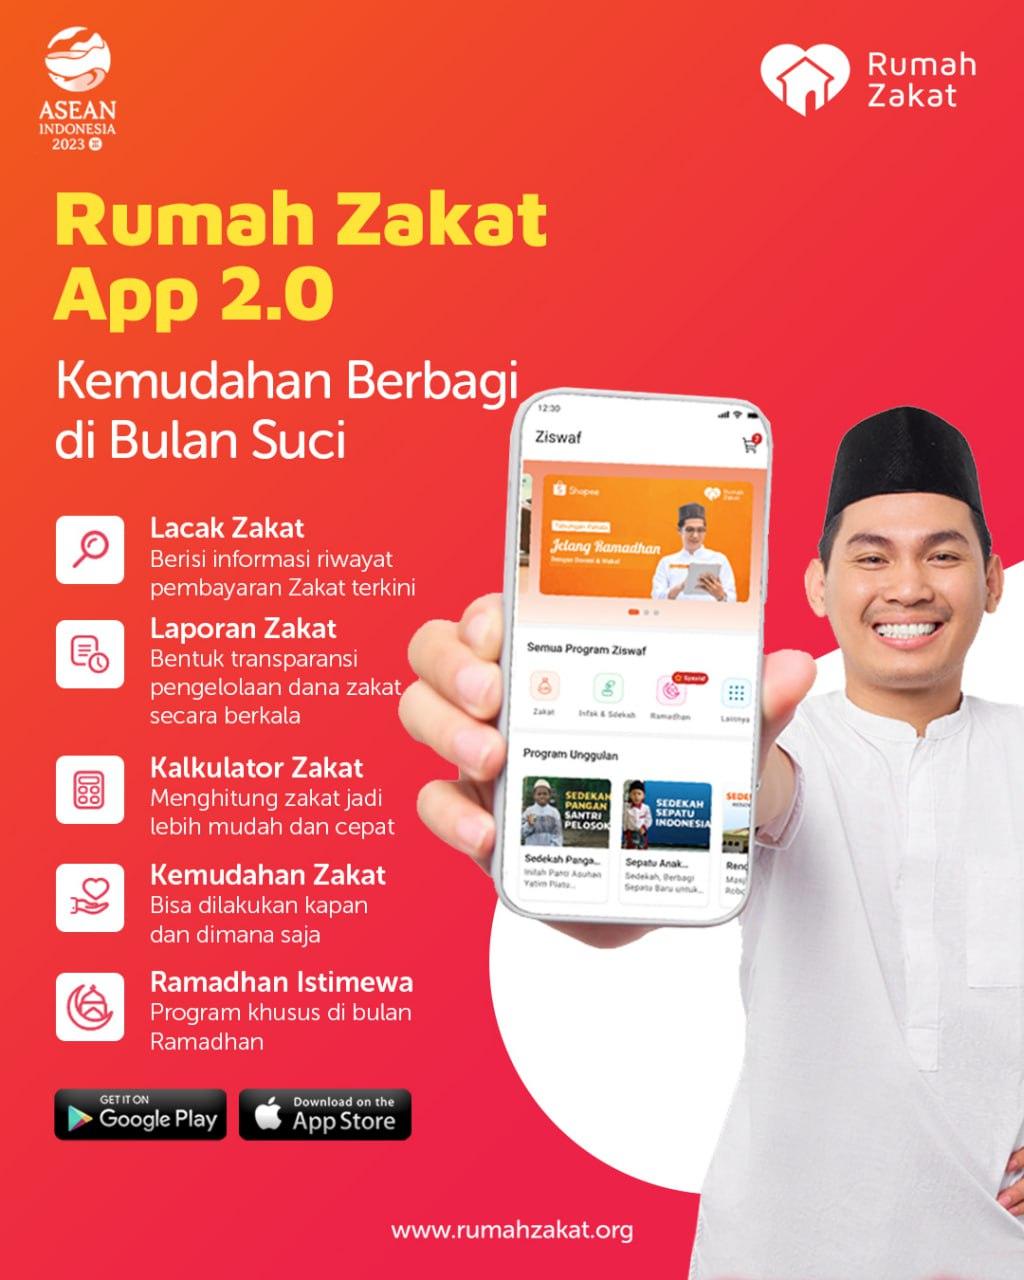 Rumah Zakat App